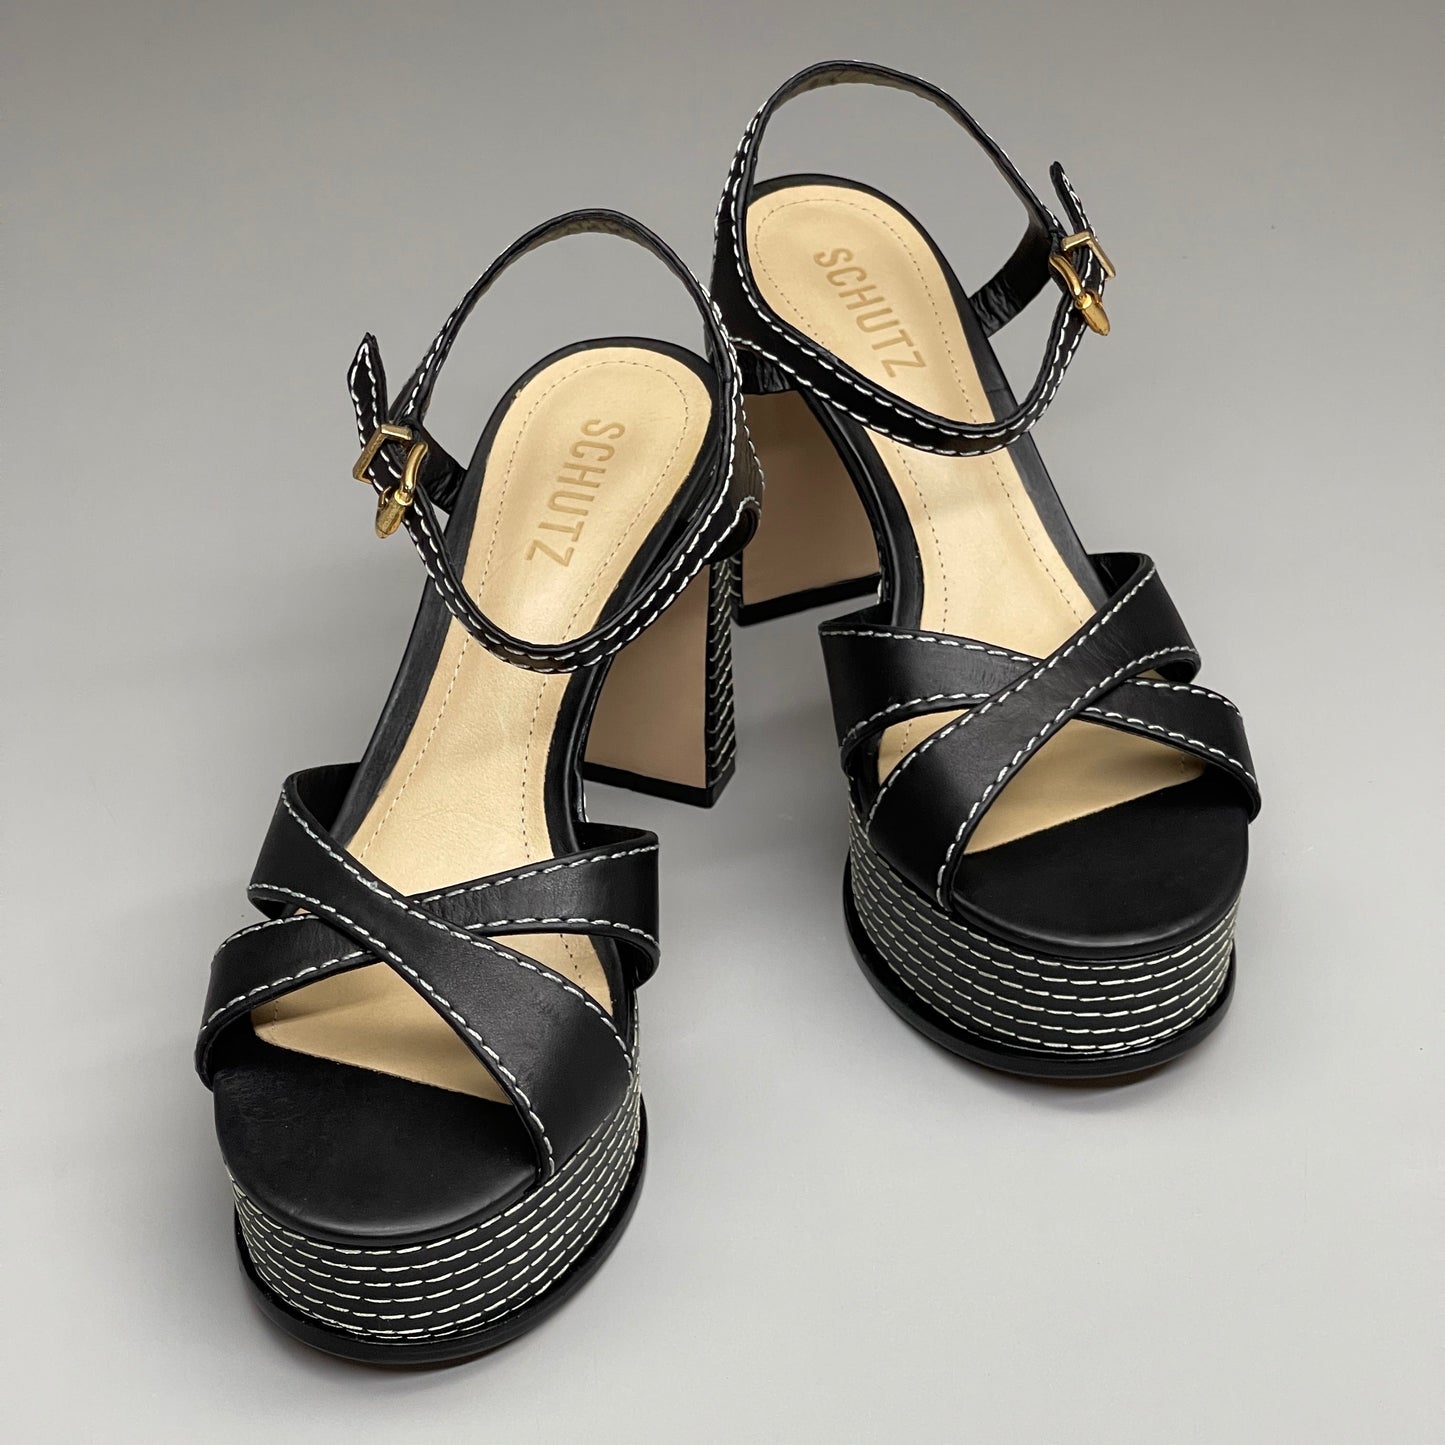 SCHUTZ Keefa Casual Women's Leather Sandal Black Platform 4" Heel Shoes Sz 5.5B (New)